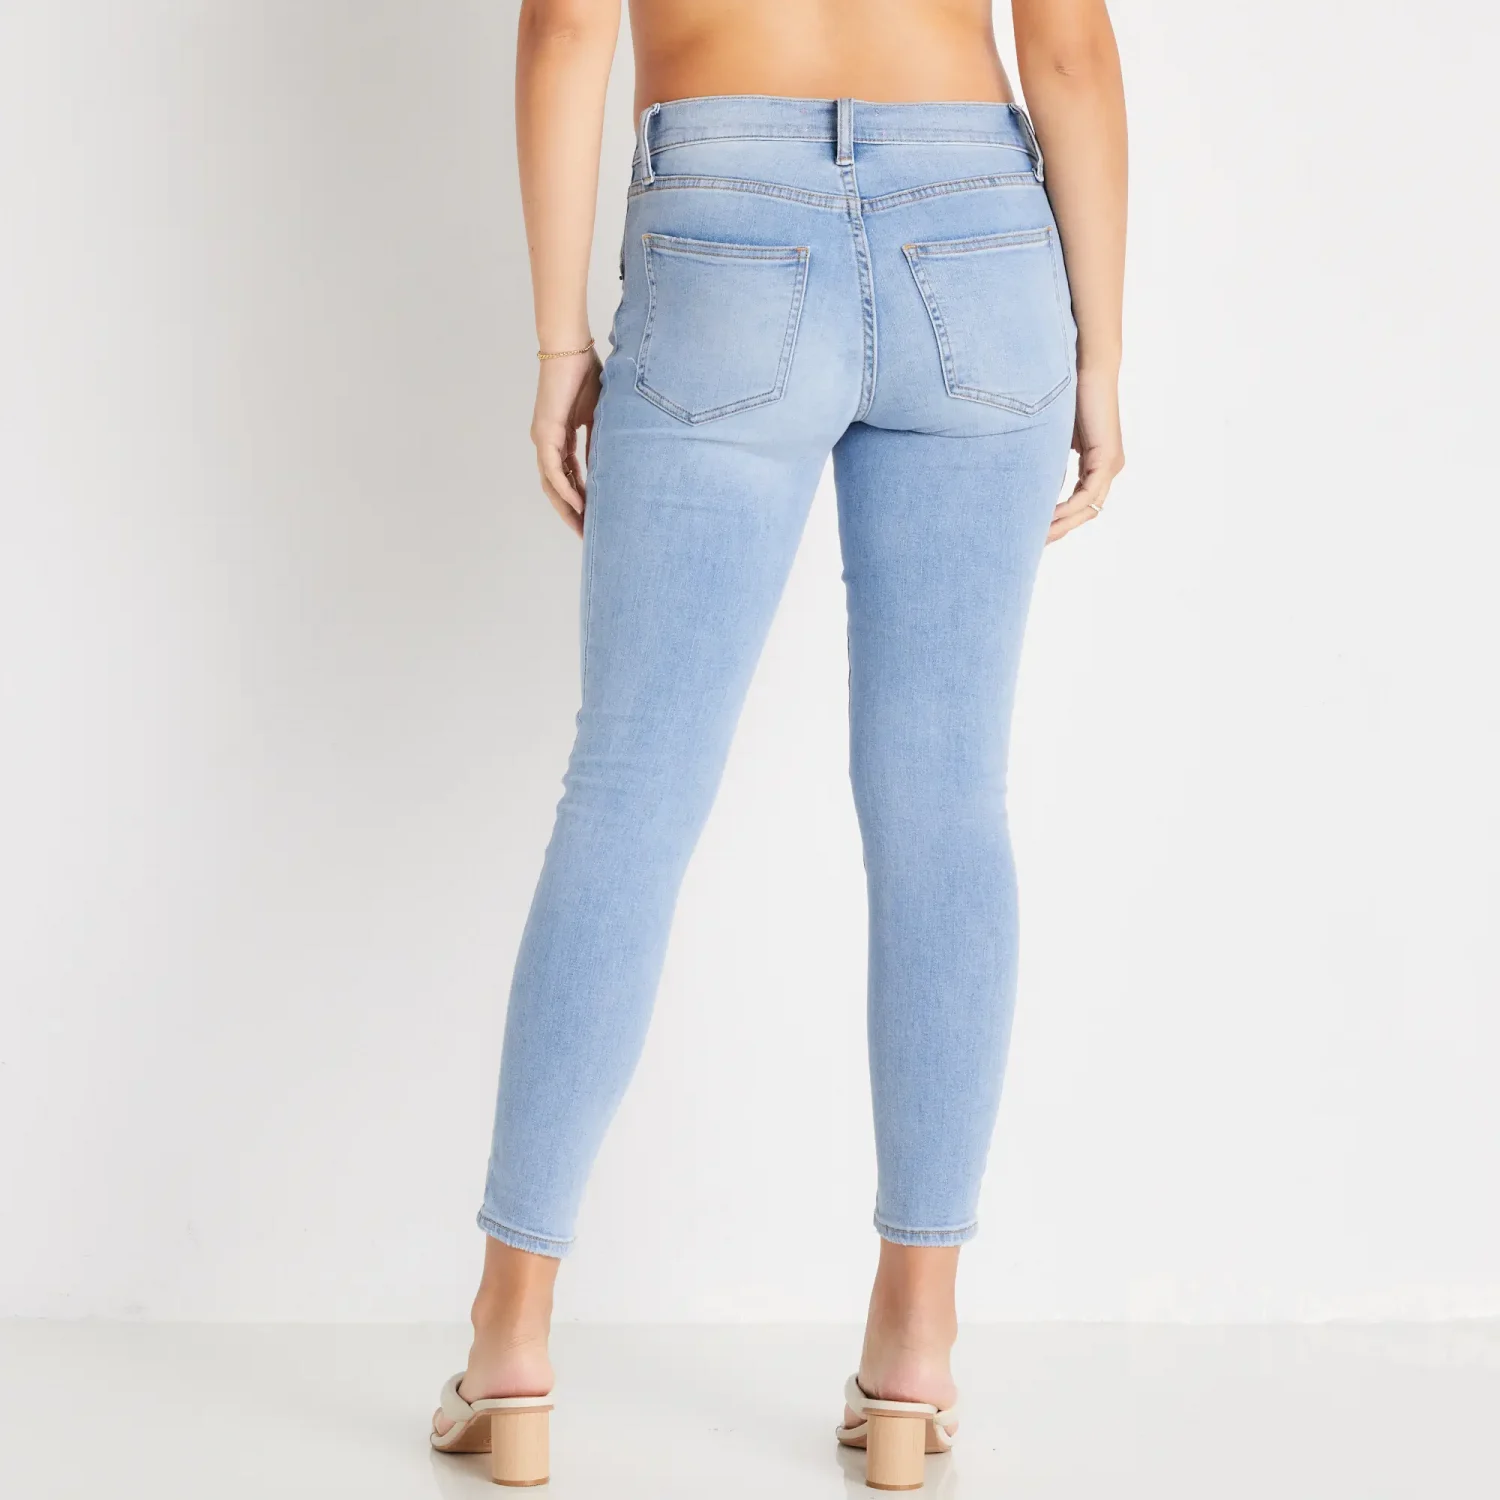 Hatch brand stylish maternity slim fit jeans